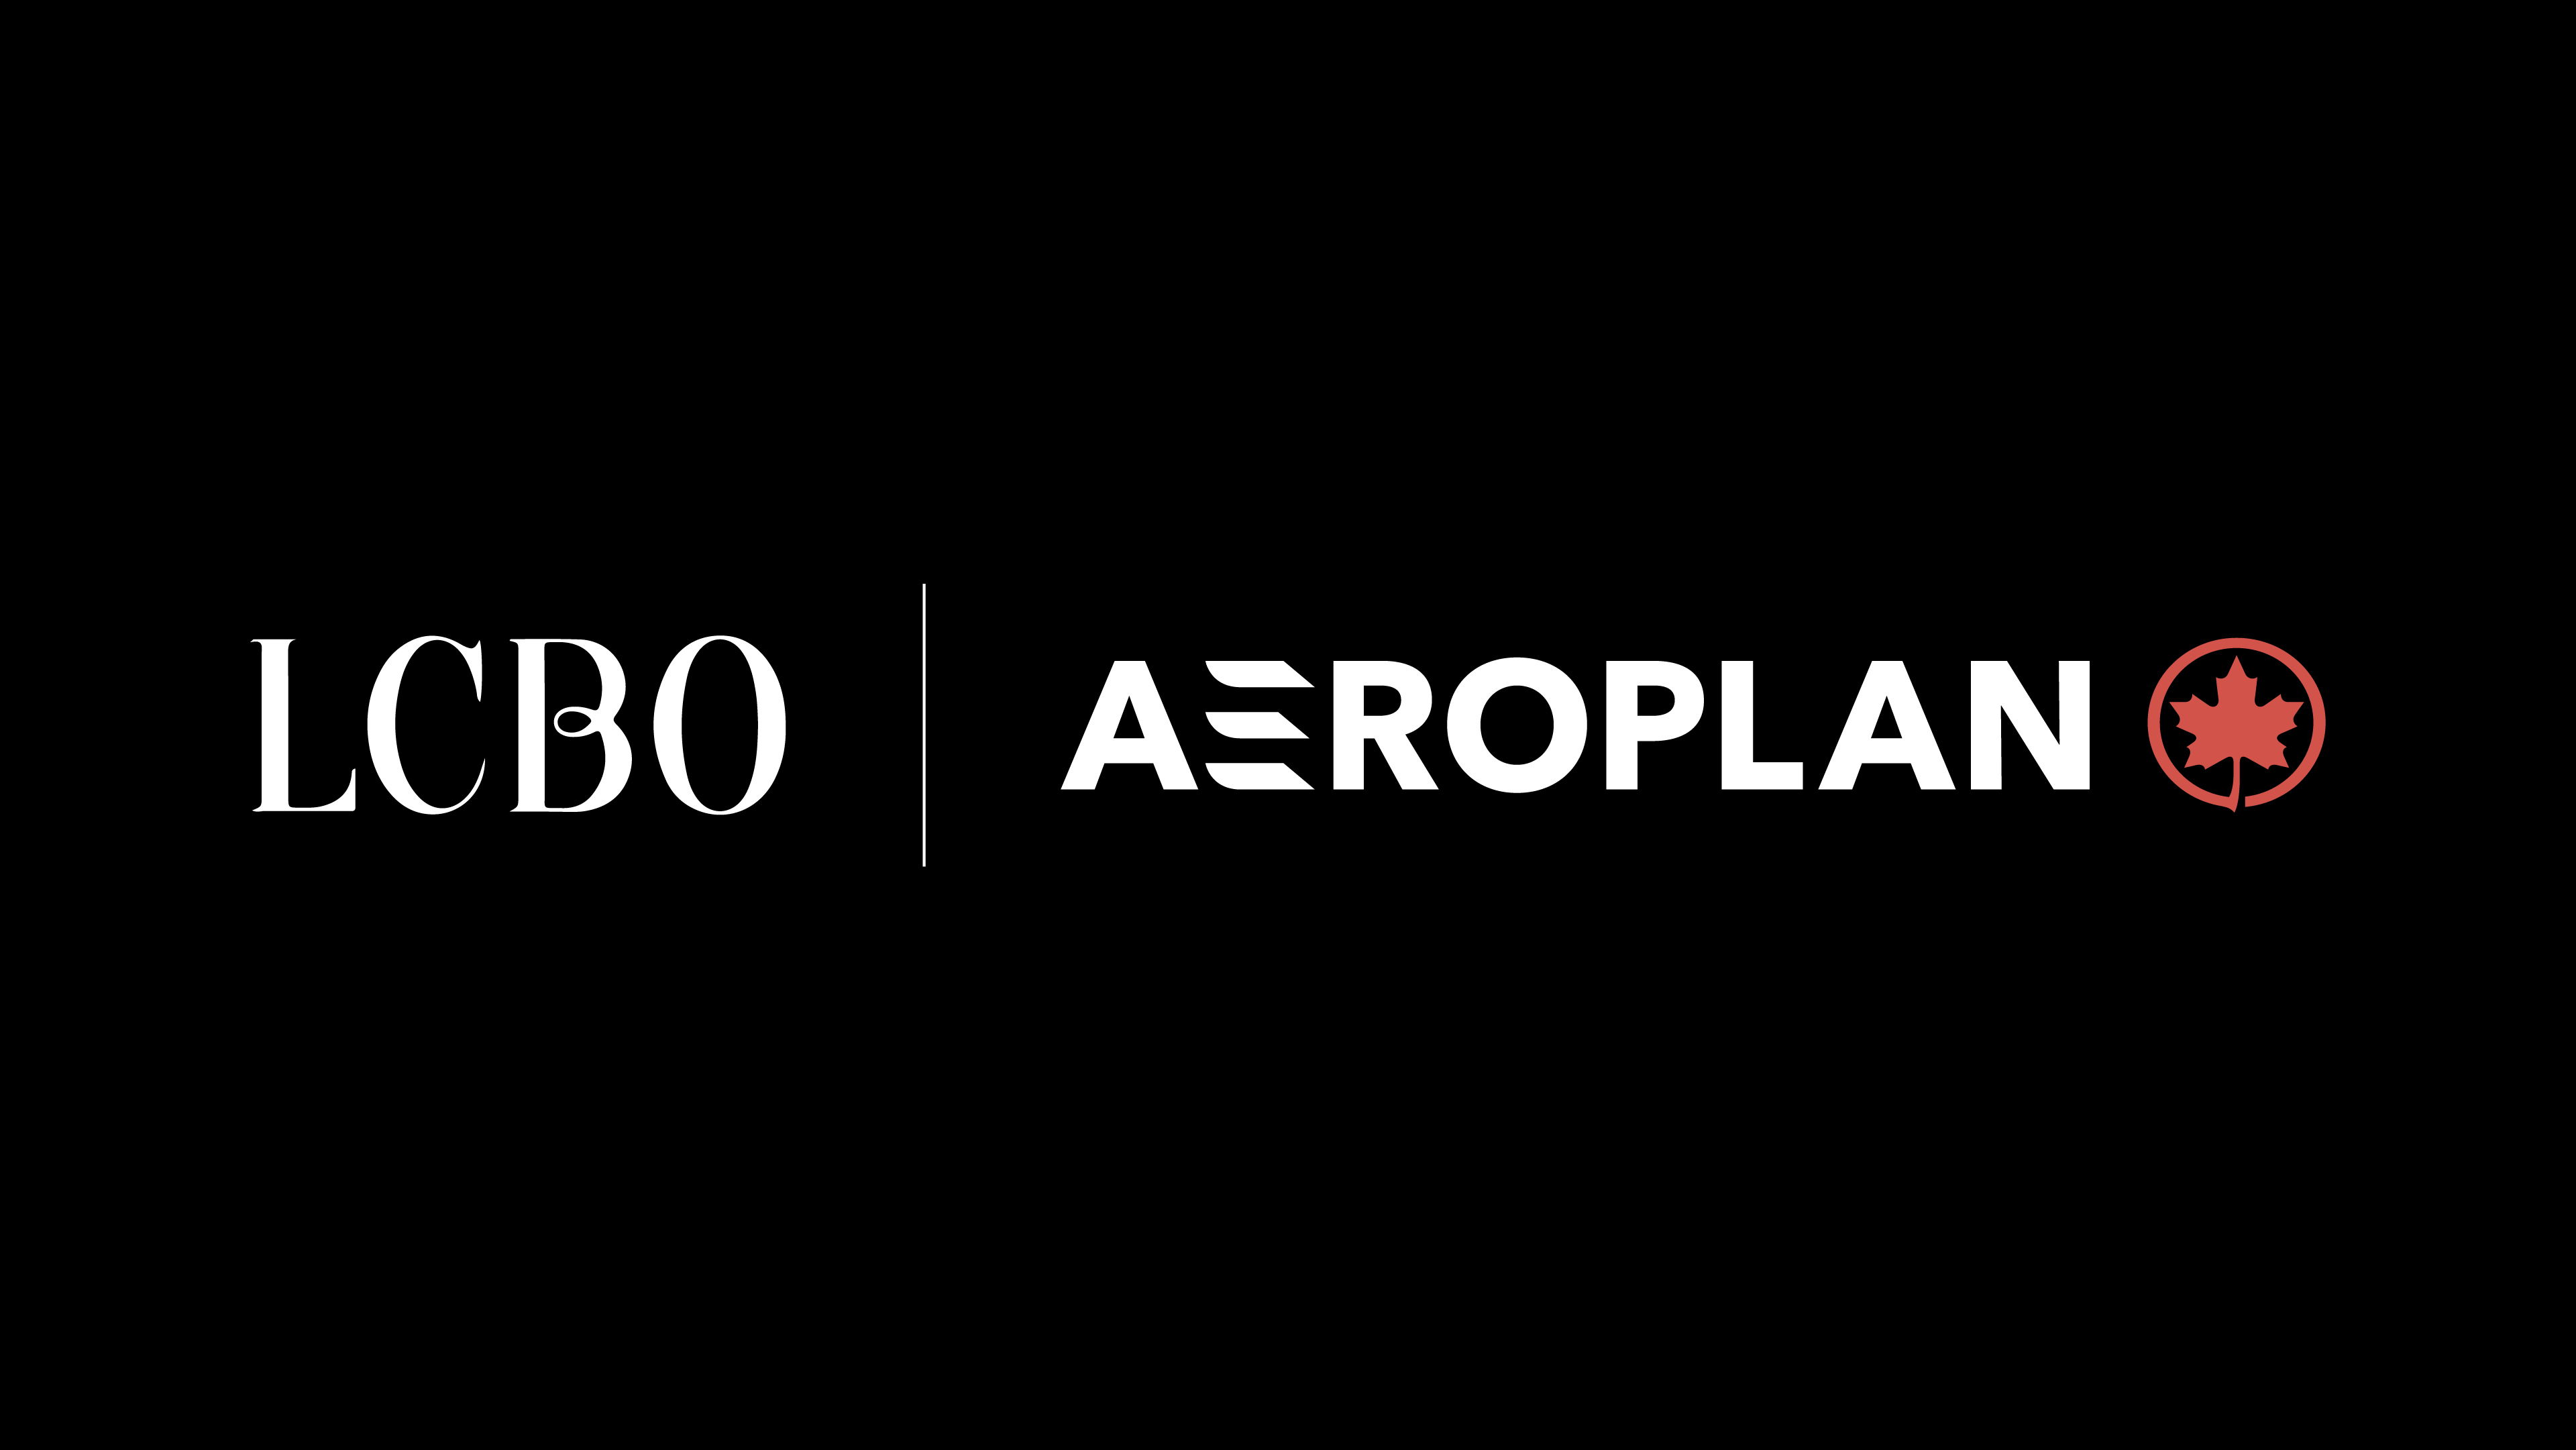 Aeroplan and LCBO logos